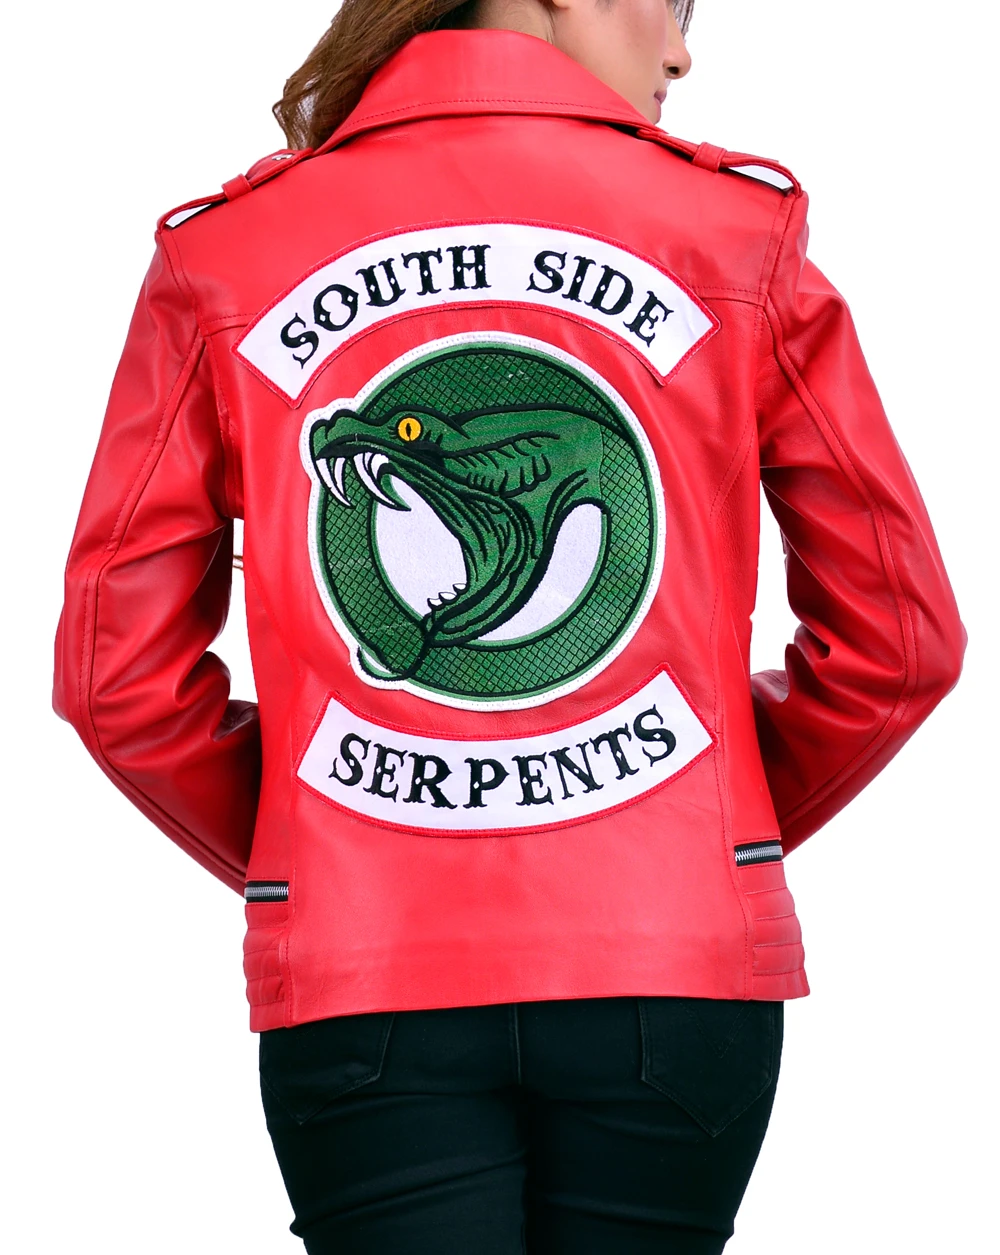 The Southside Serpents Riverdale Cheryl Blossom jacket